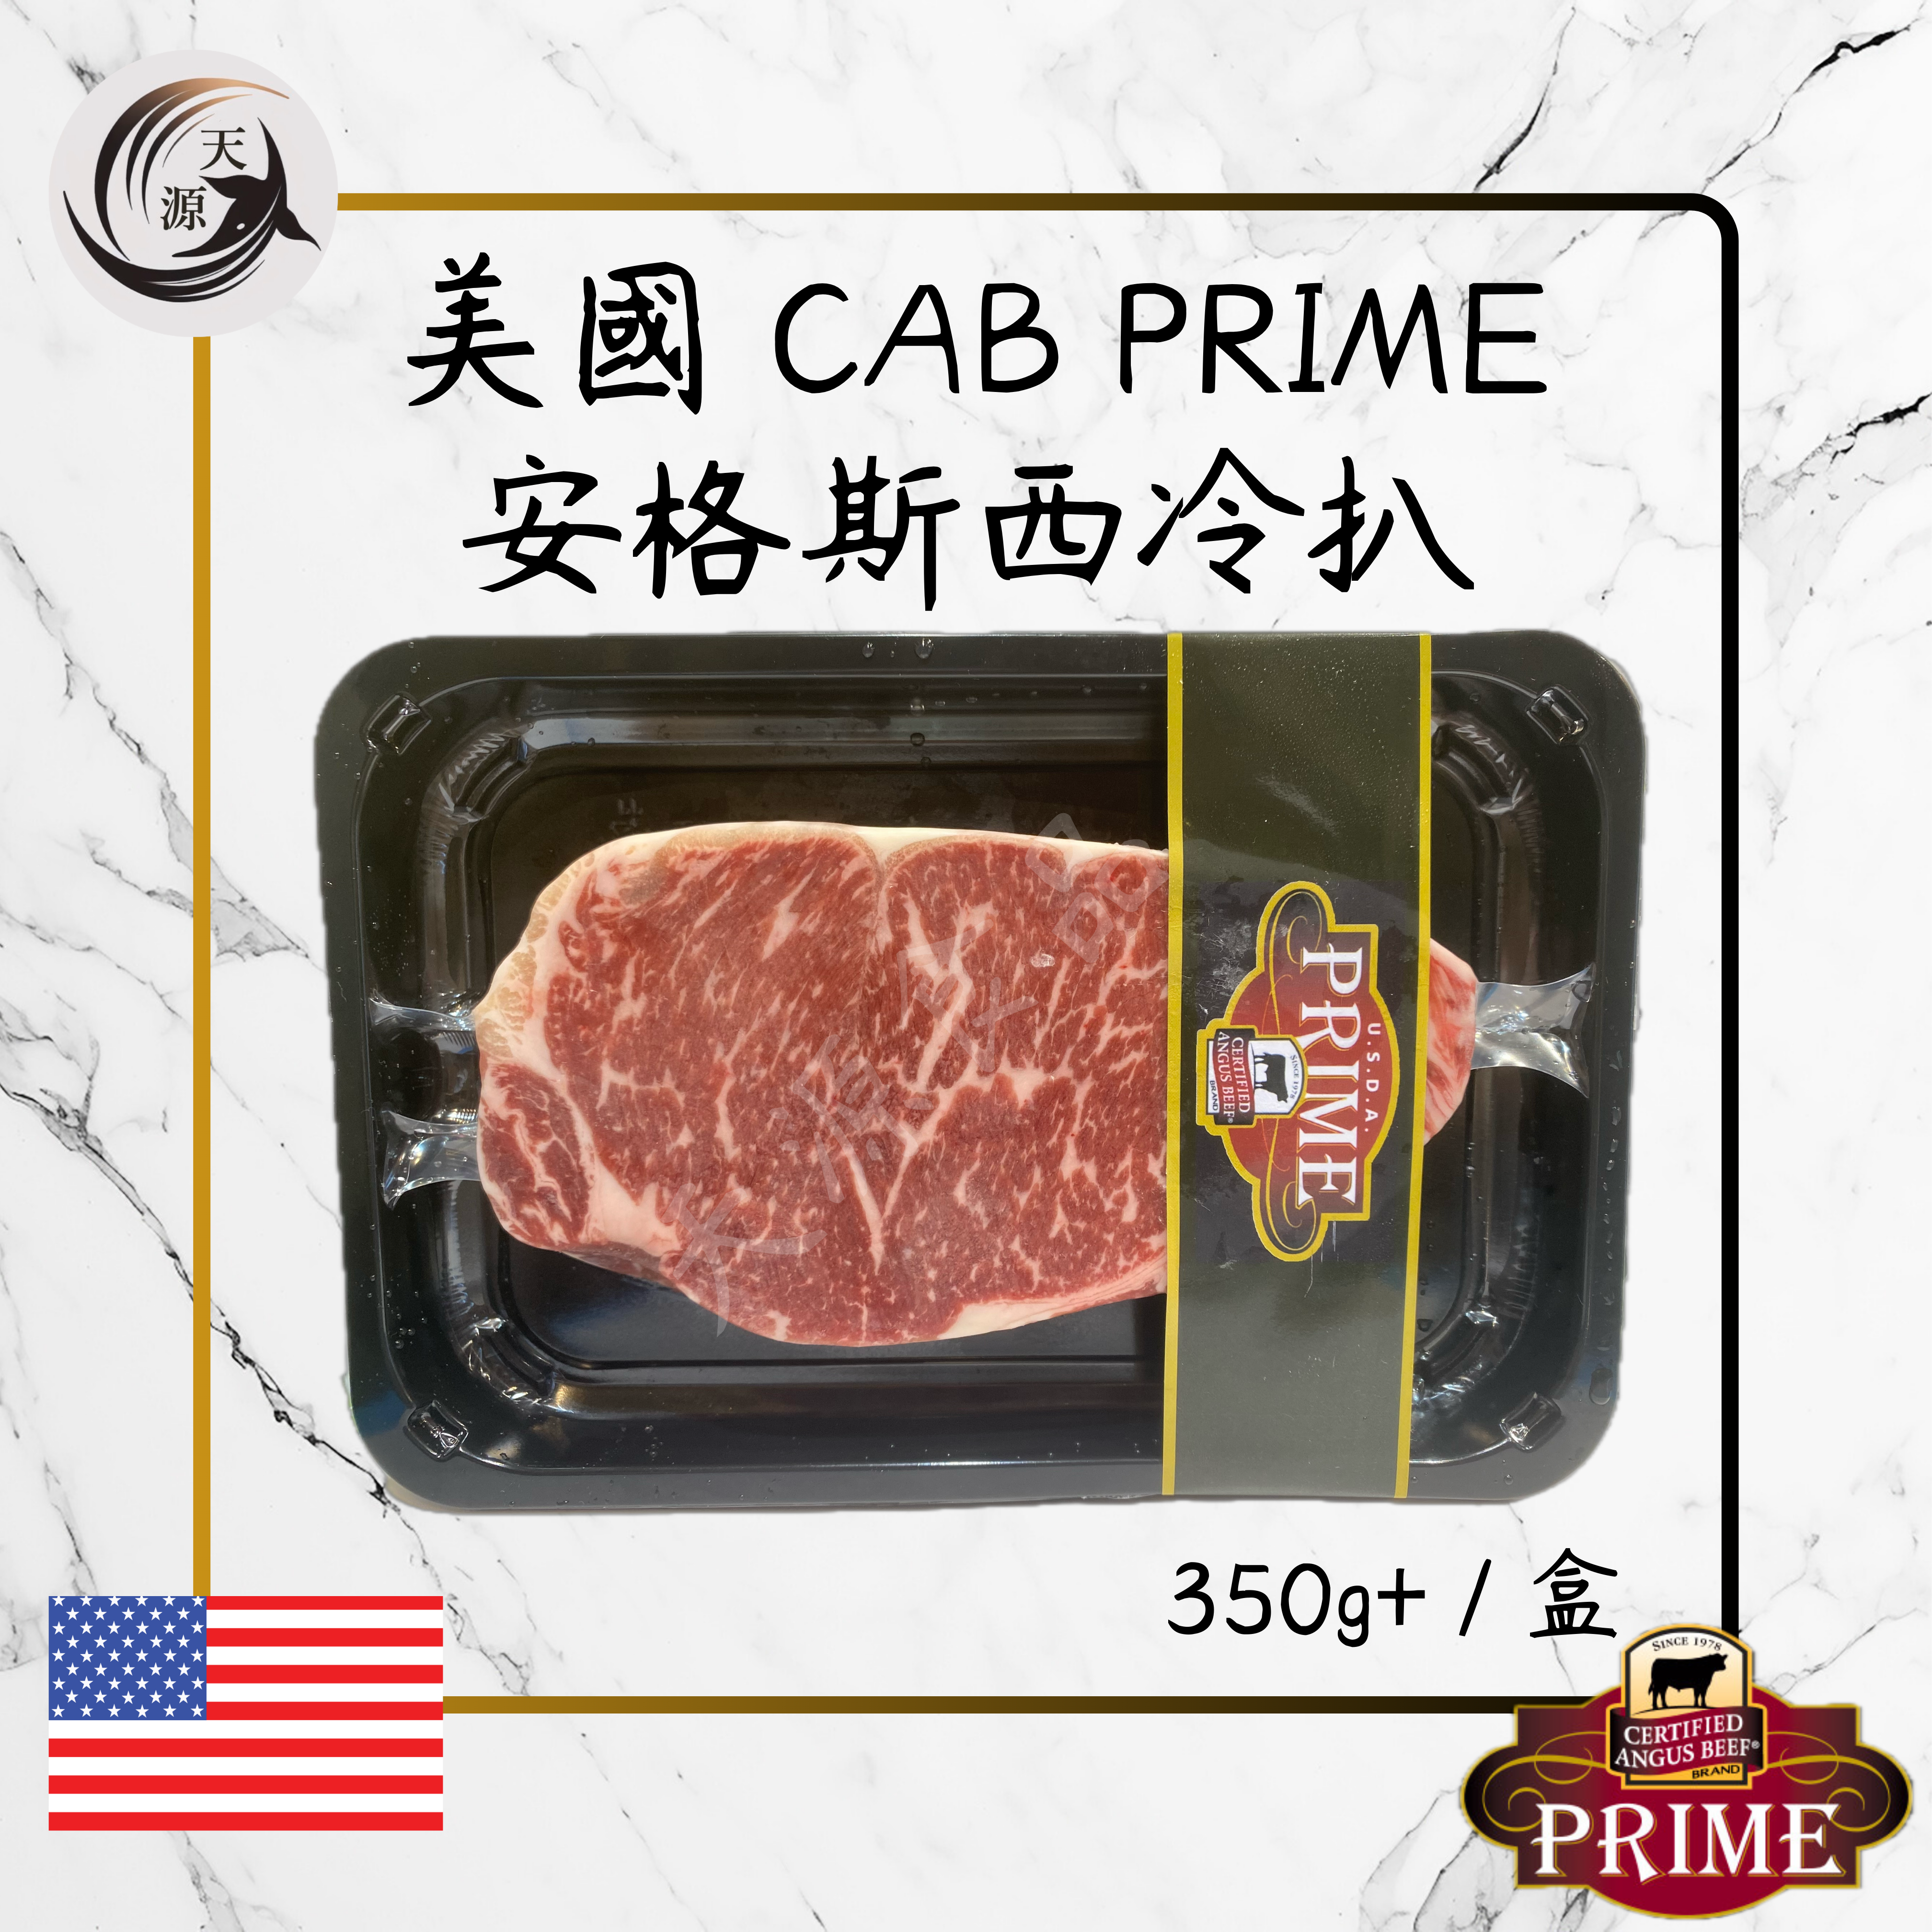 American CAB PRIME Angus Sirloin Steak